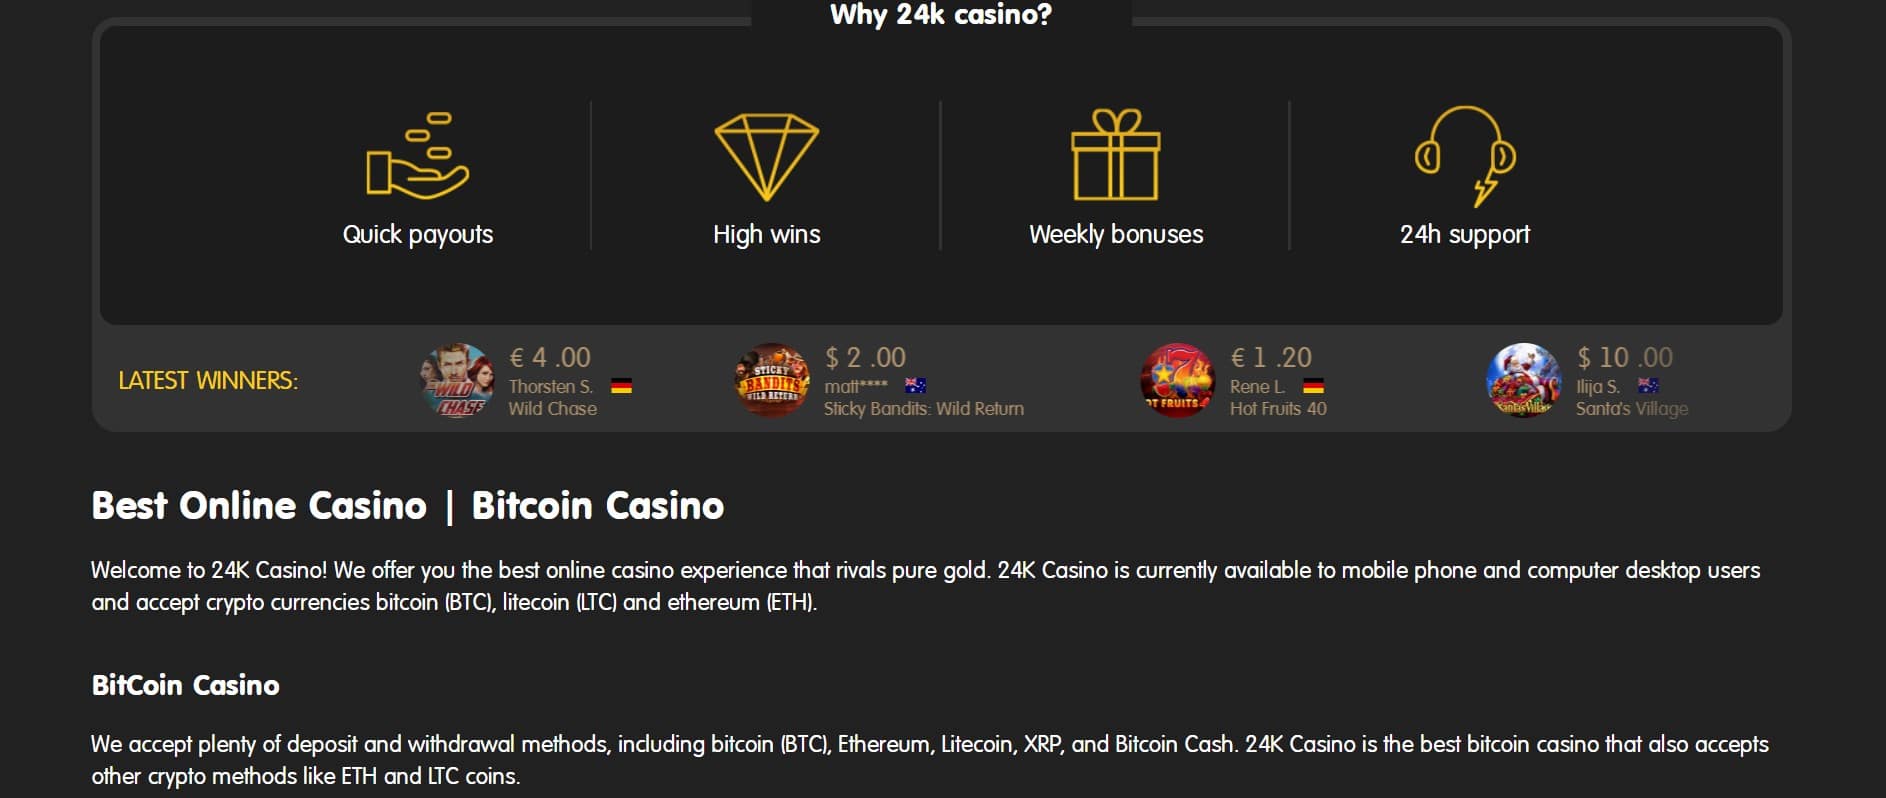 jogar no casino online